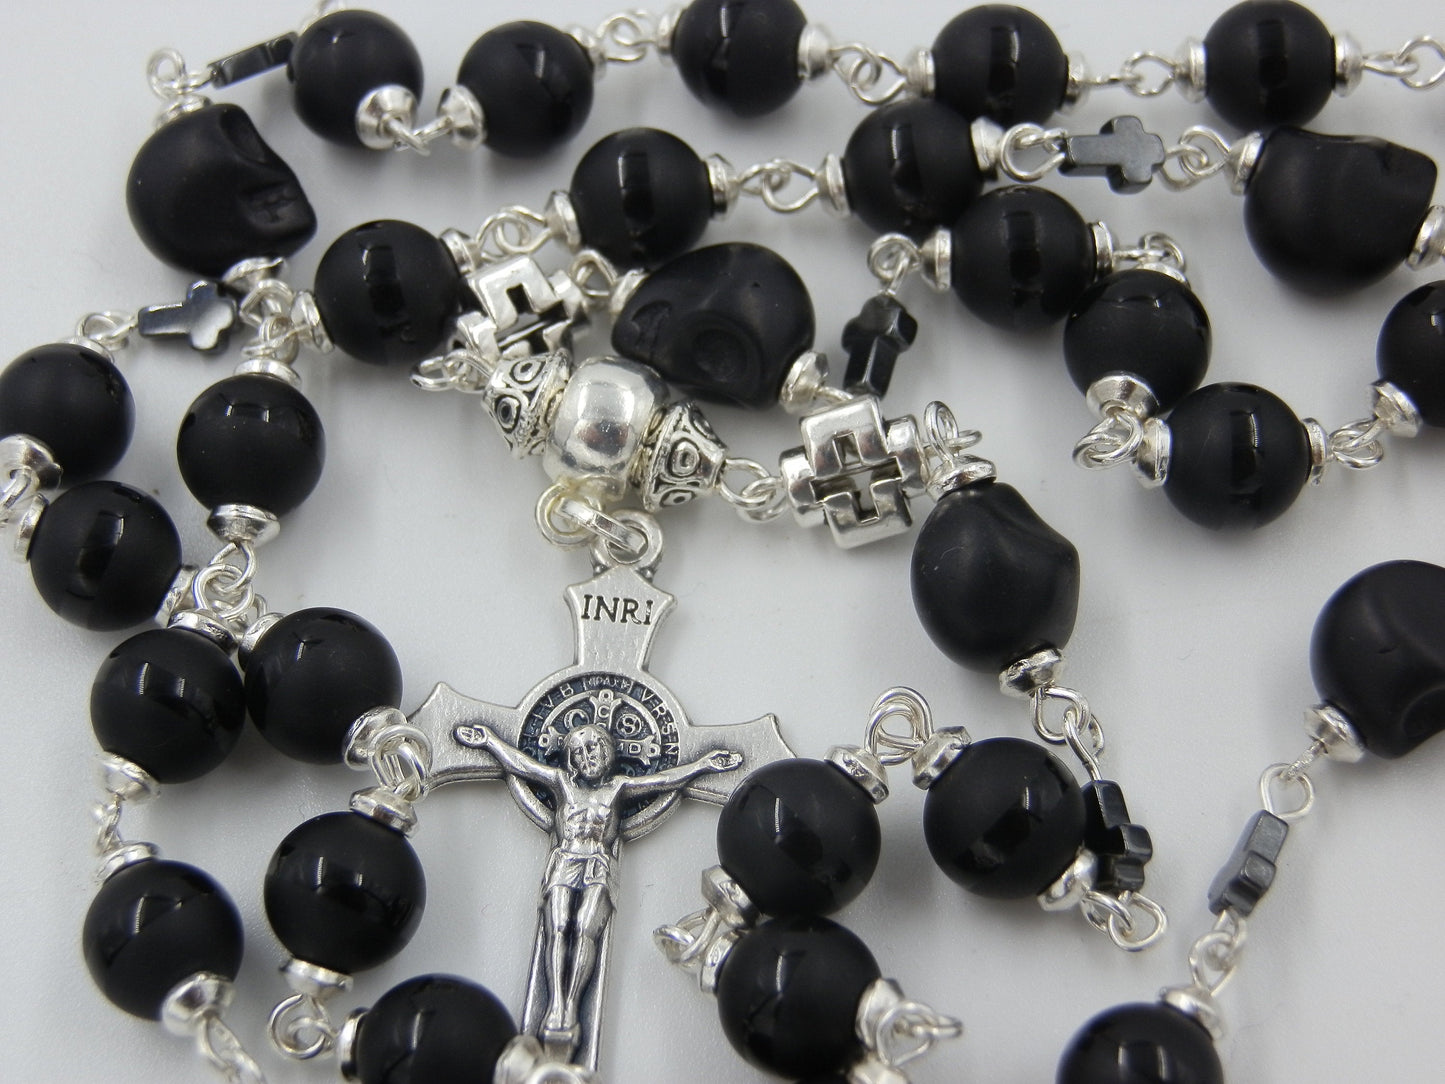 Onyx Chaplet for the Dead, Rosary Prayer Chaplet, St. Benedict Crucifix, Momento Mori beads, travel Rosaries, Wedding gift, Prayer Rosaries,